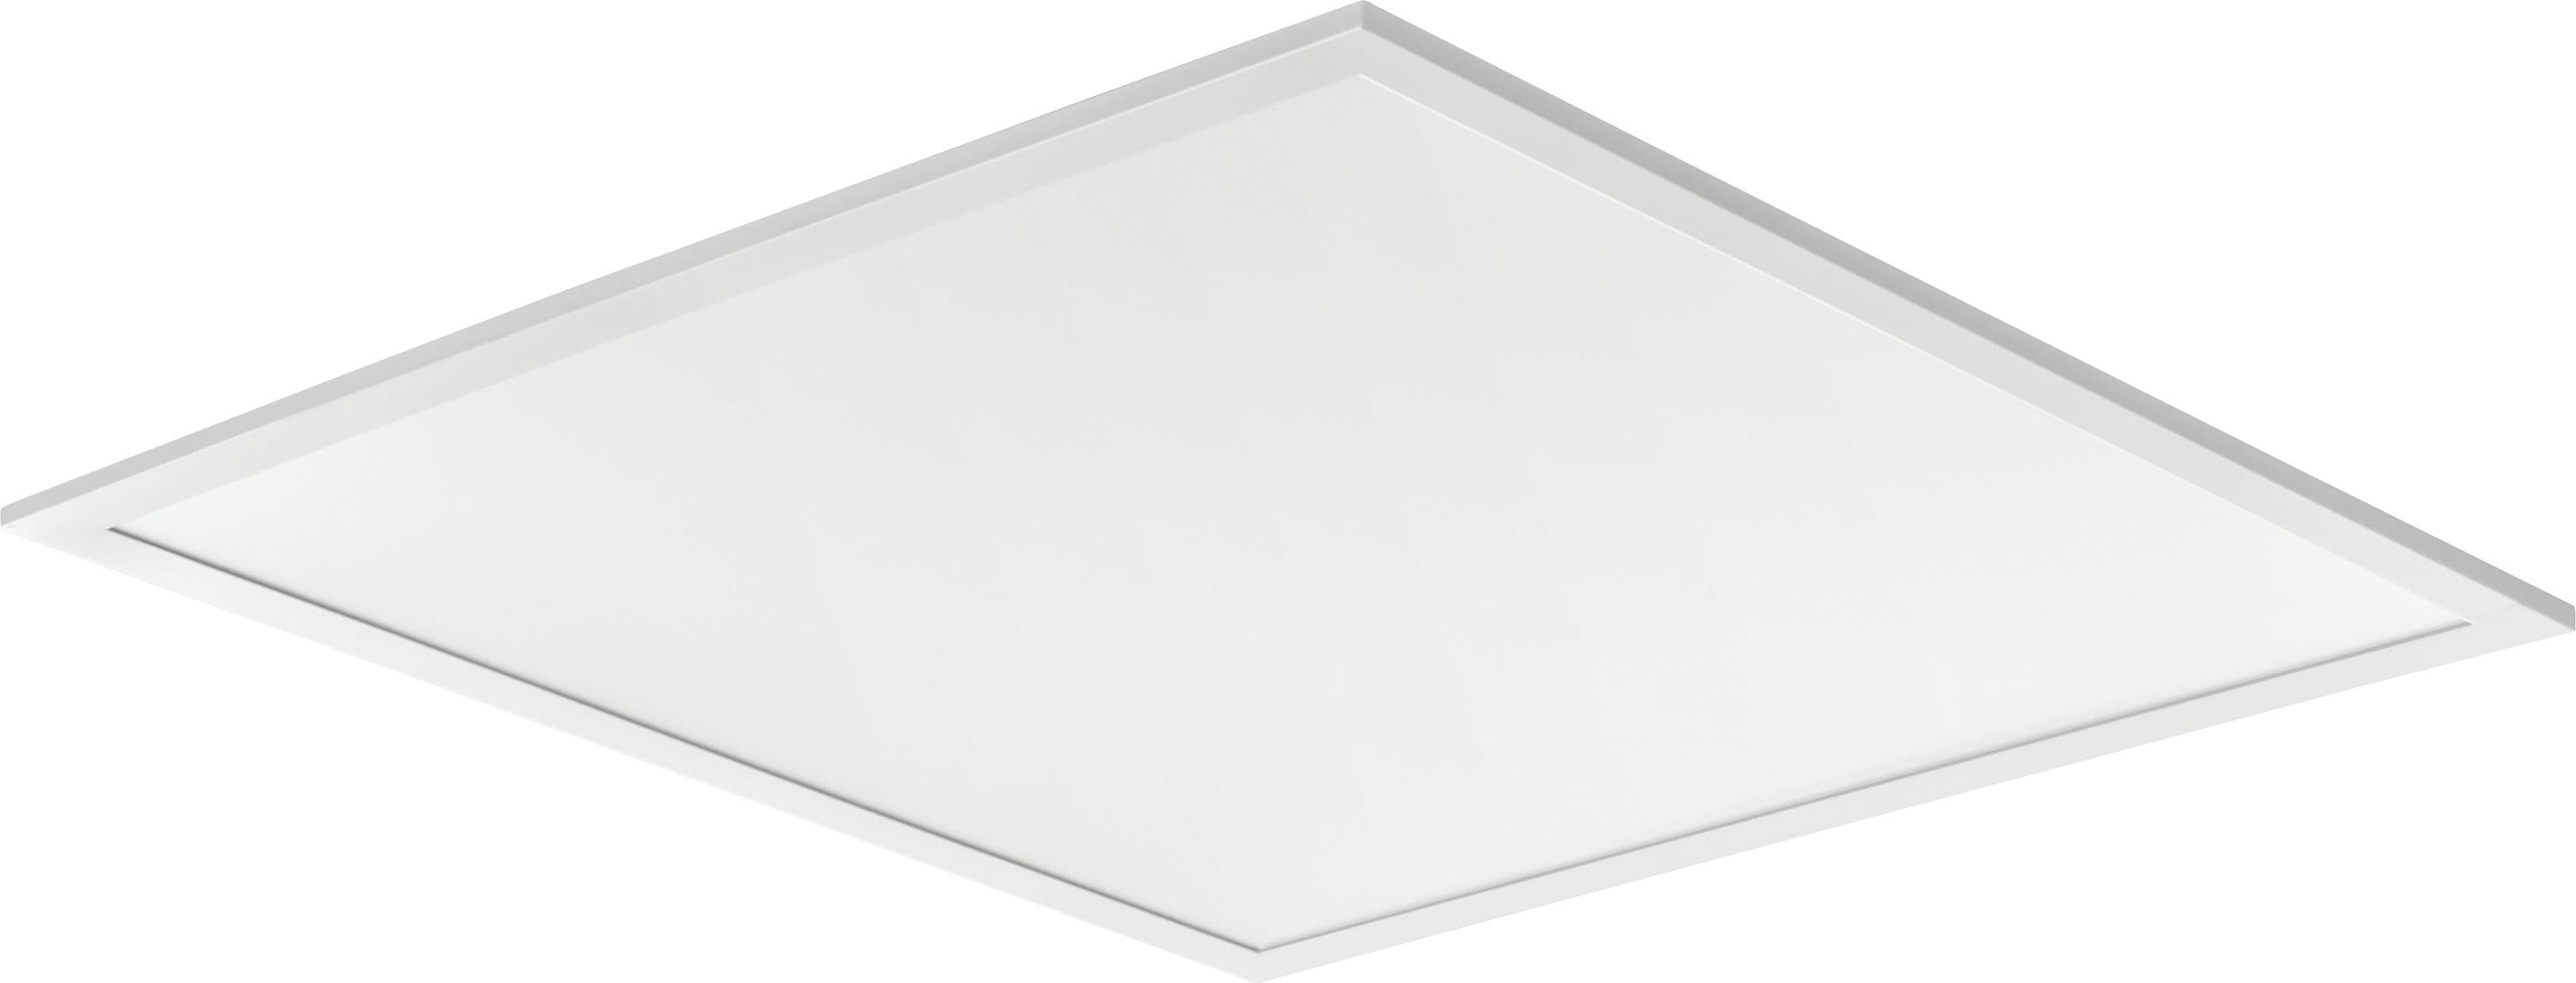 Lithonia Lighting 2-ft x 2-ft Adjustable Lumens Switchable White LED Panel  Light